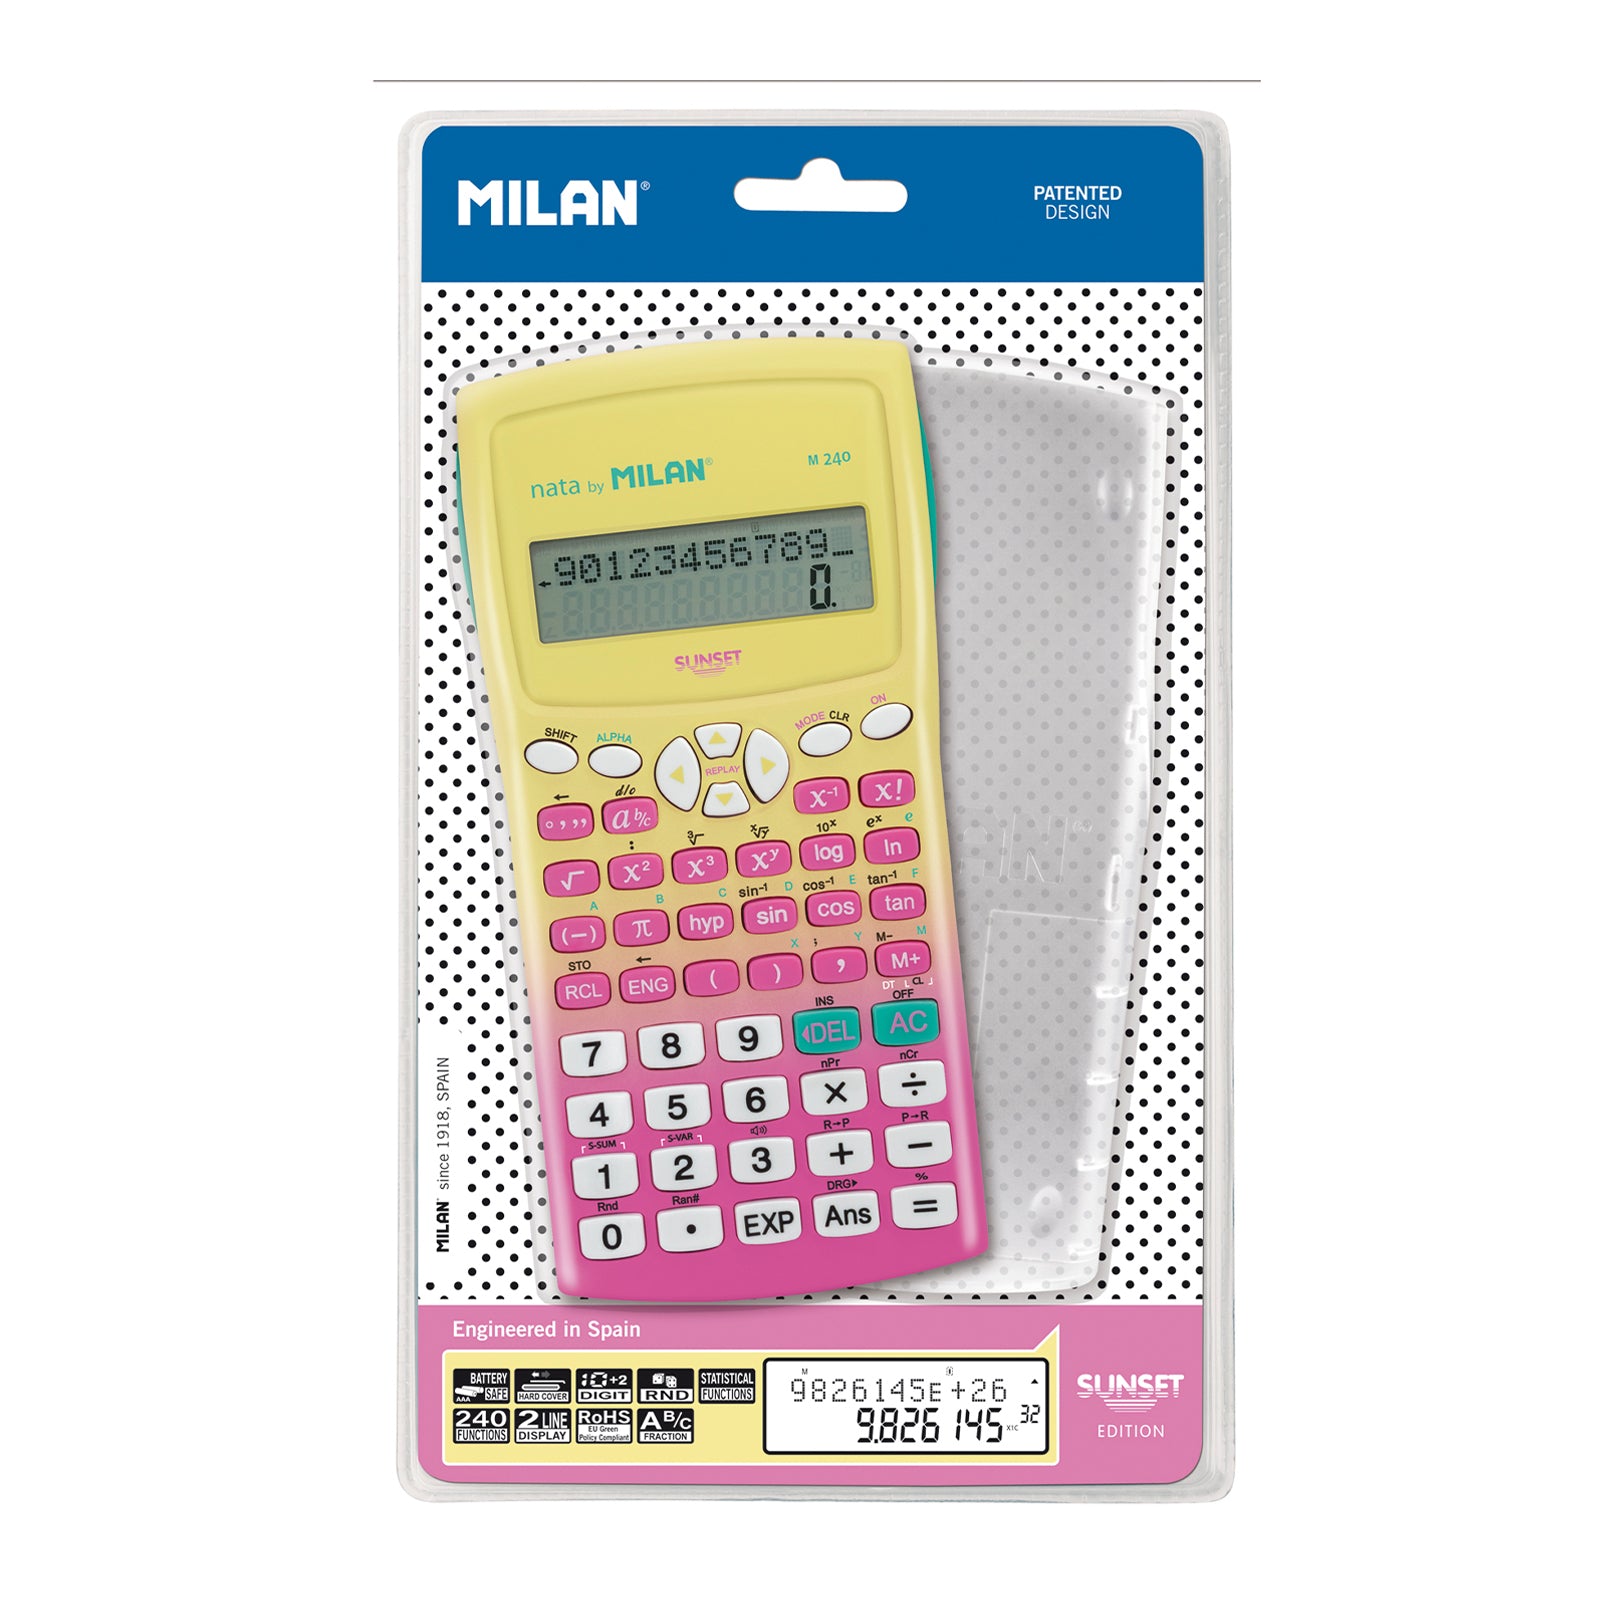 MILAN Sunset - Calculadora Científica Escolar 240 Funciones. Pantalla LCD 2 Líneas. Rosa